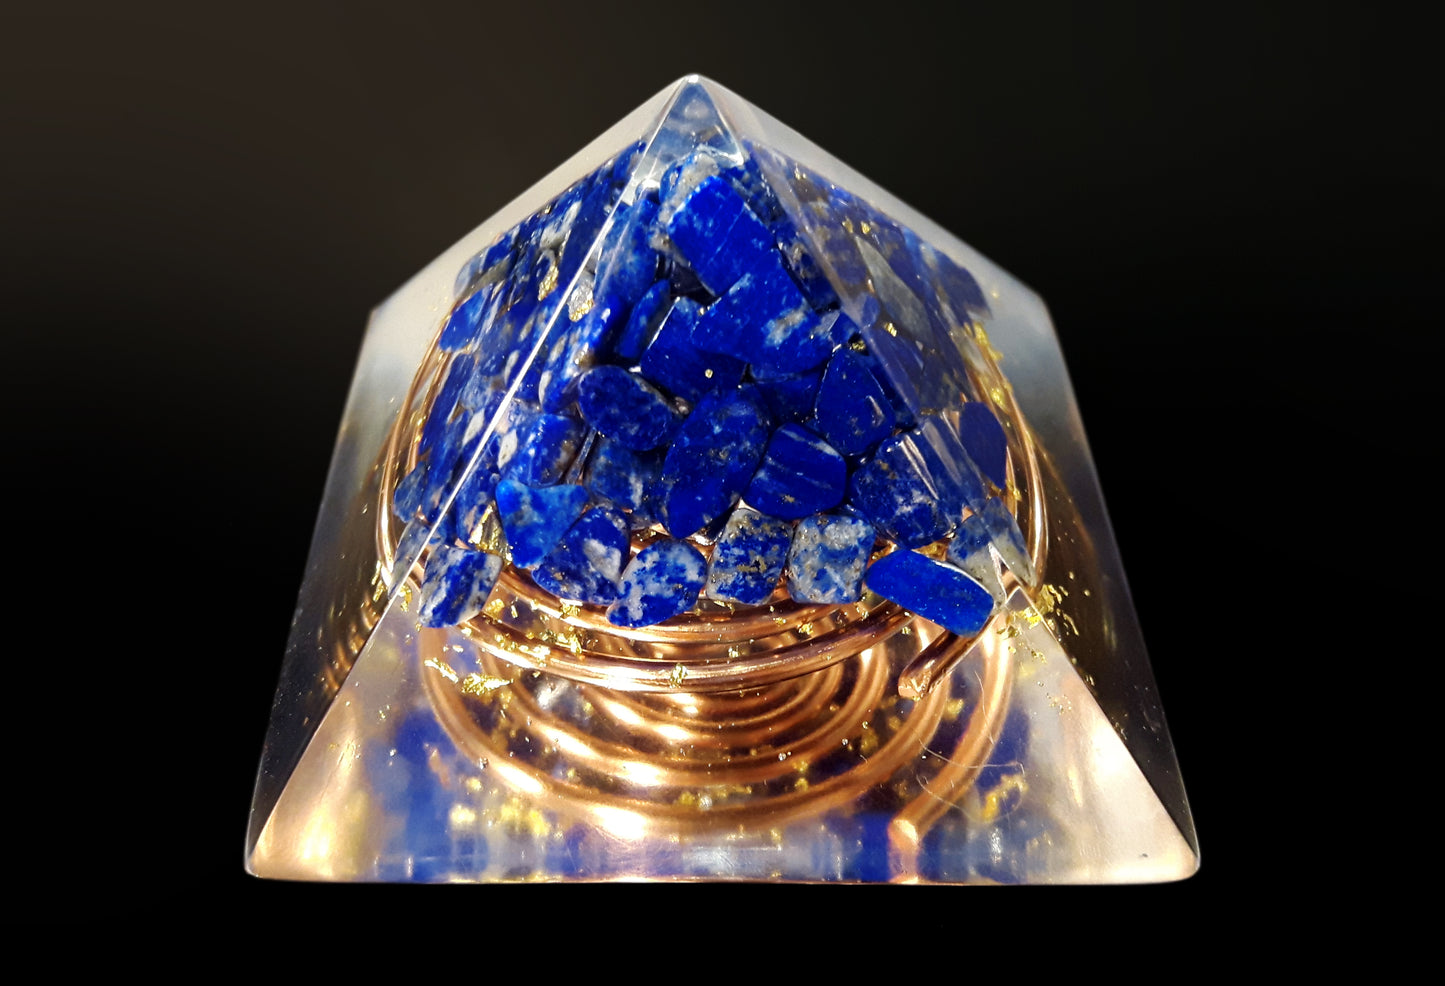 Orgonite Pyramid, Lapis Lazuli  - manifestation, protection, programmed and activated amulet charm